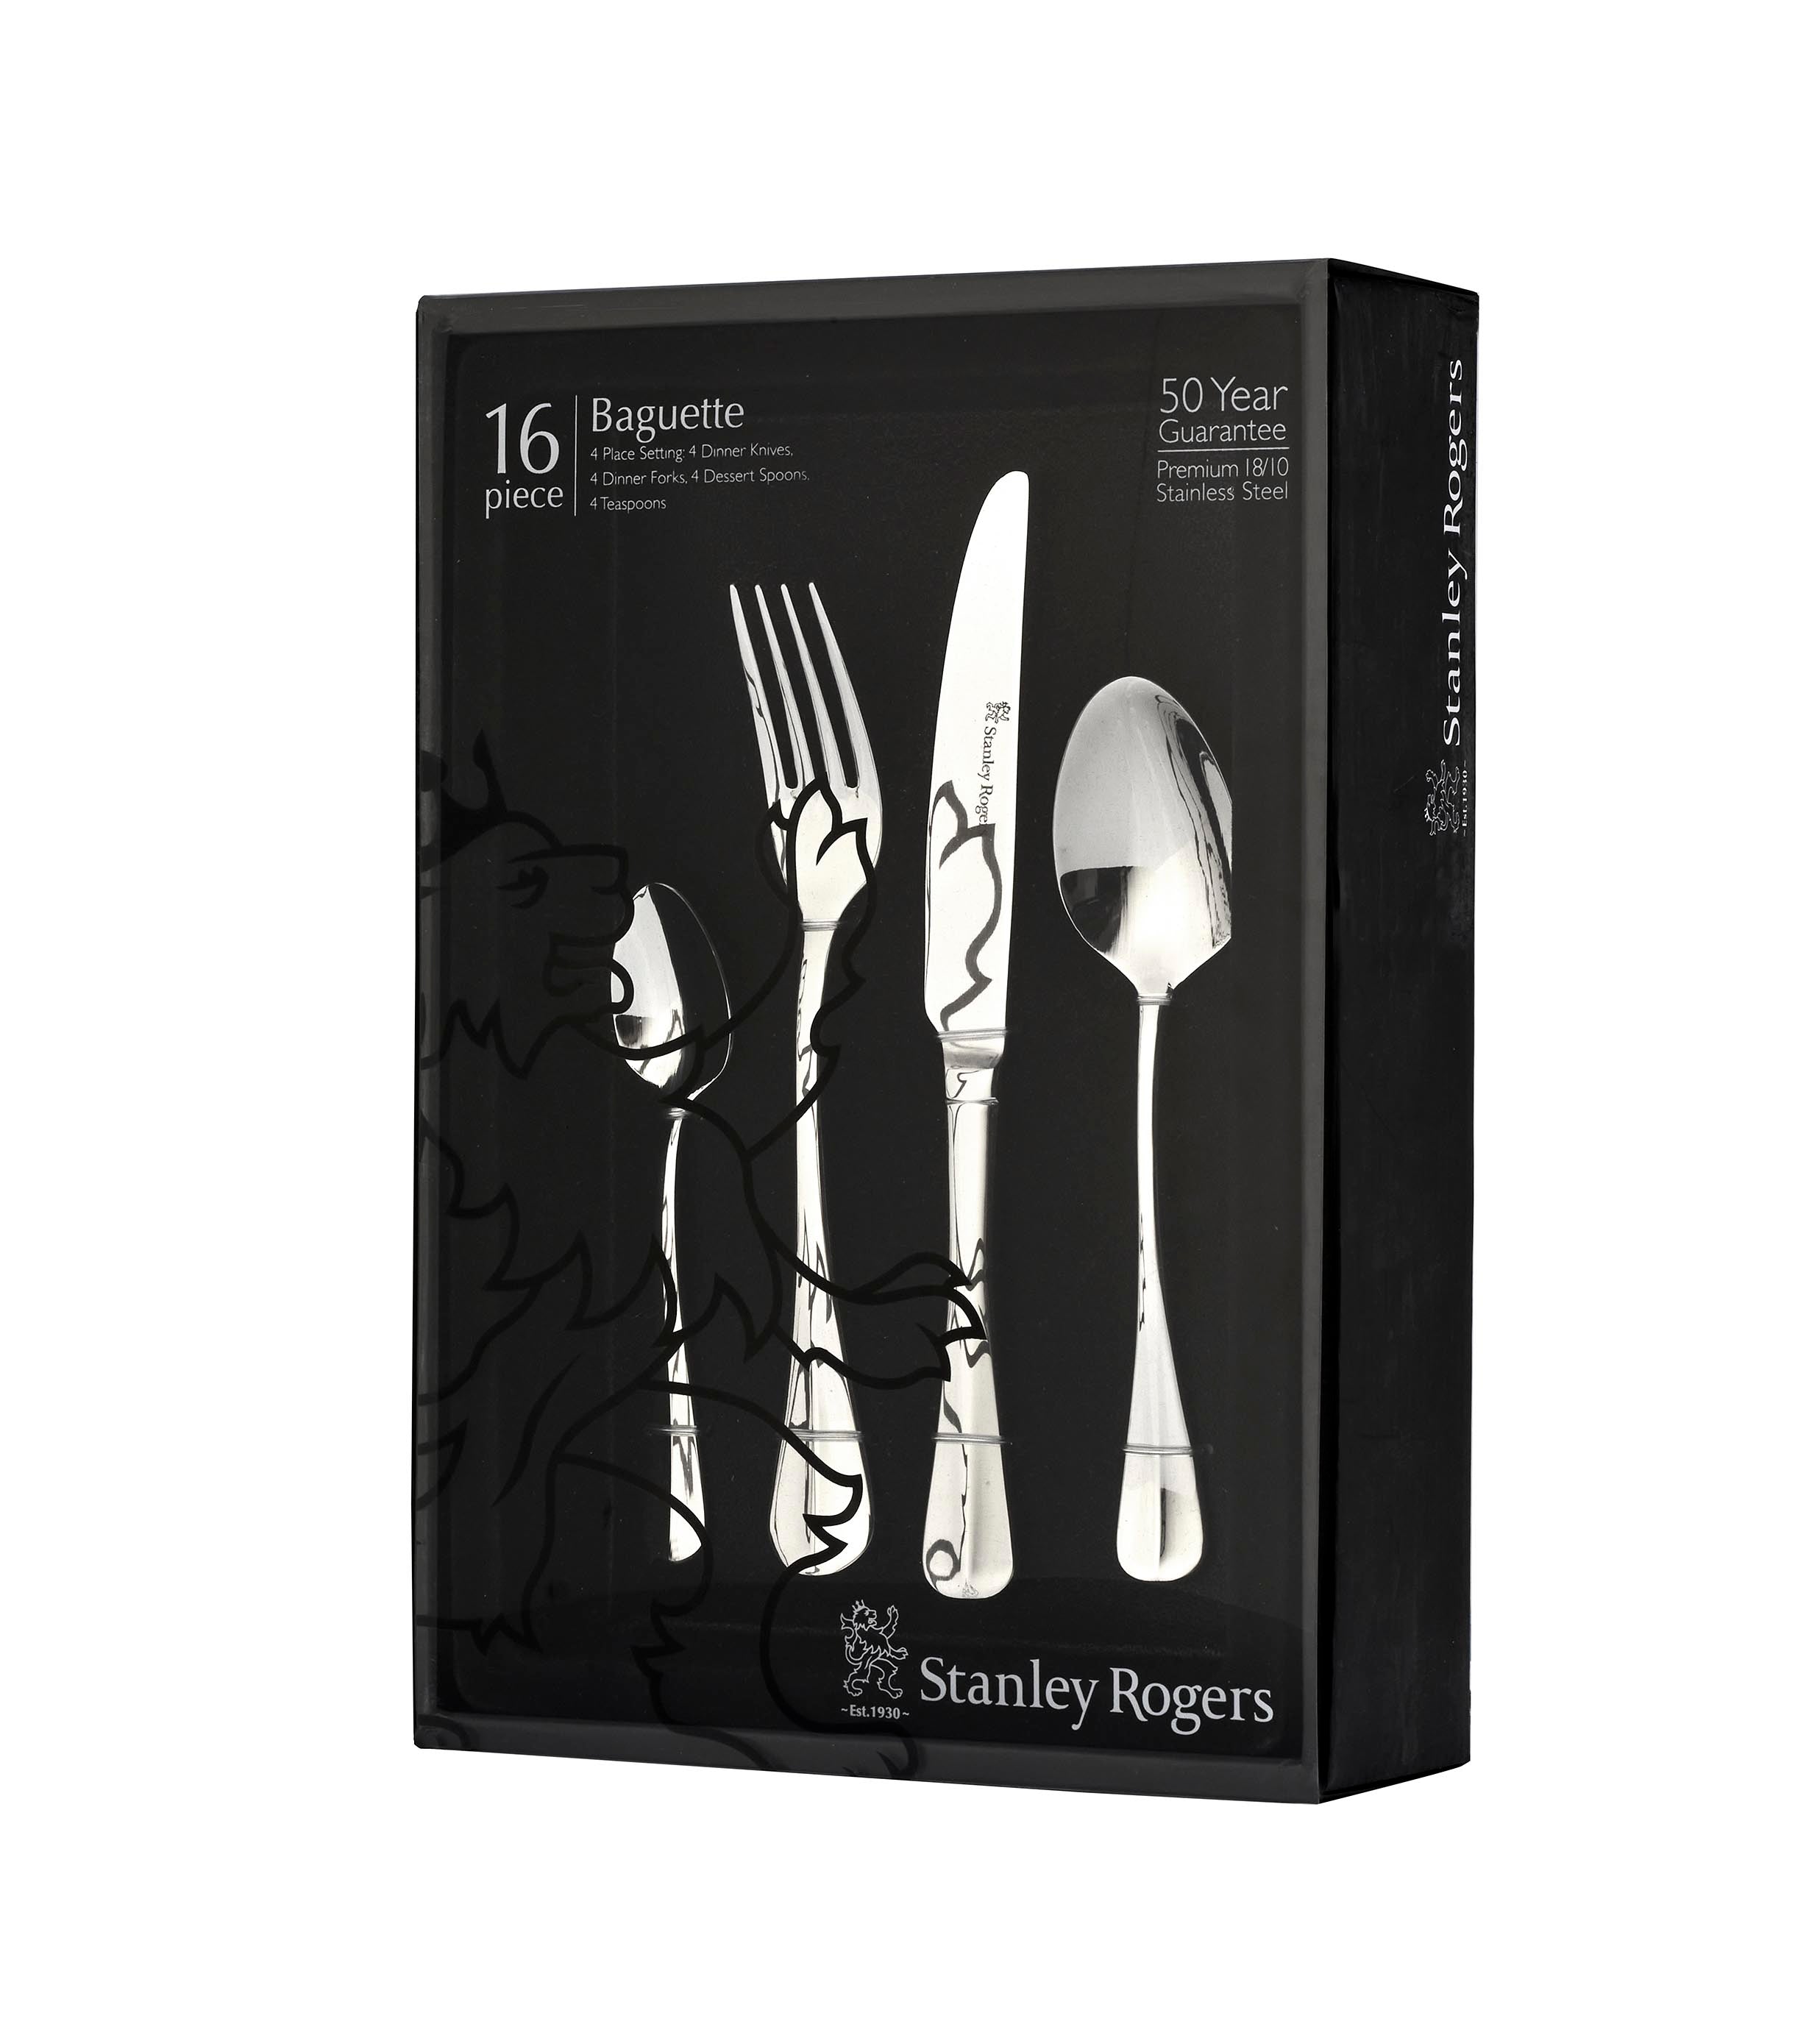 Stanley Rogers Baguette 16 Piece Cutlery Set